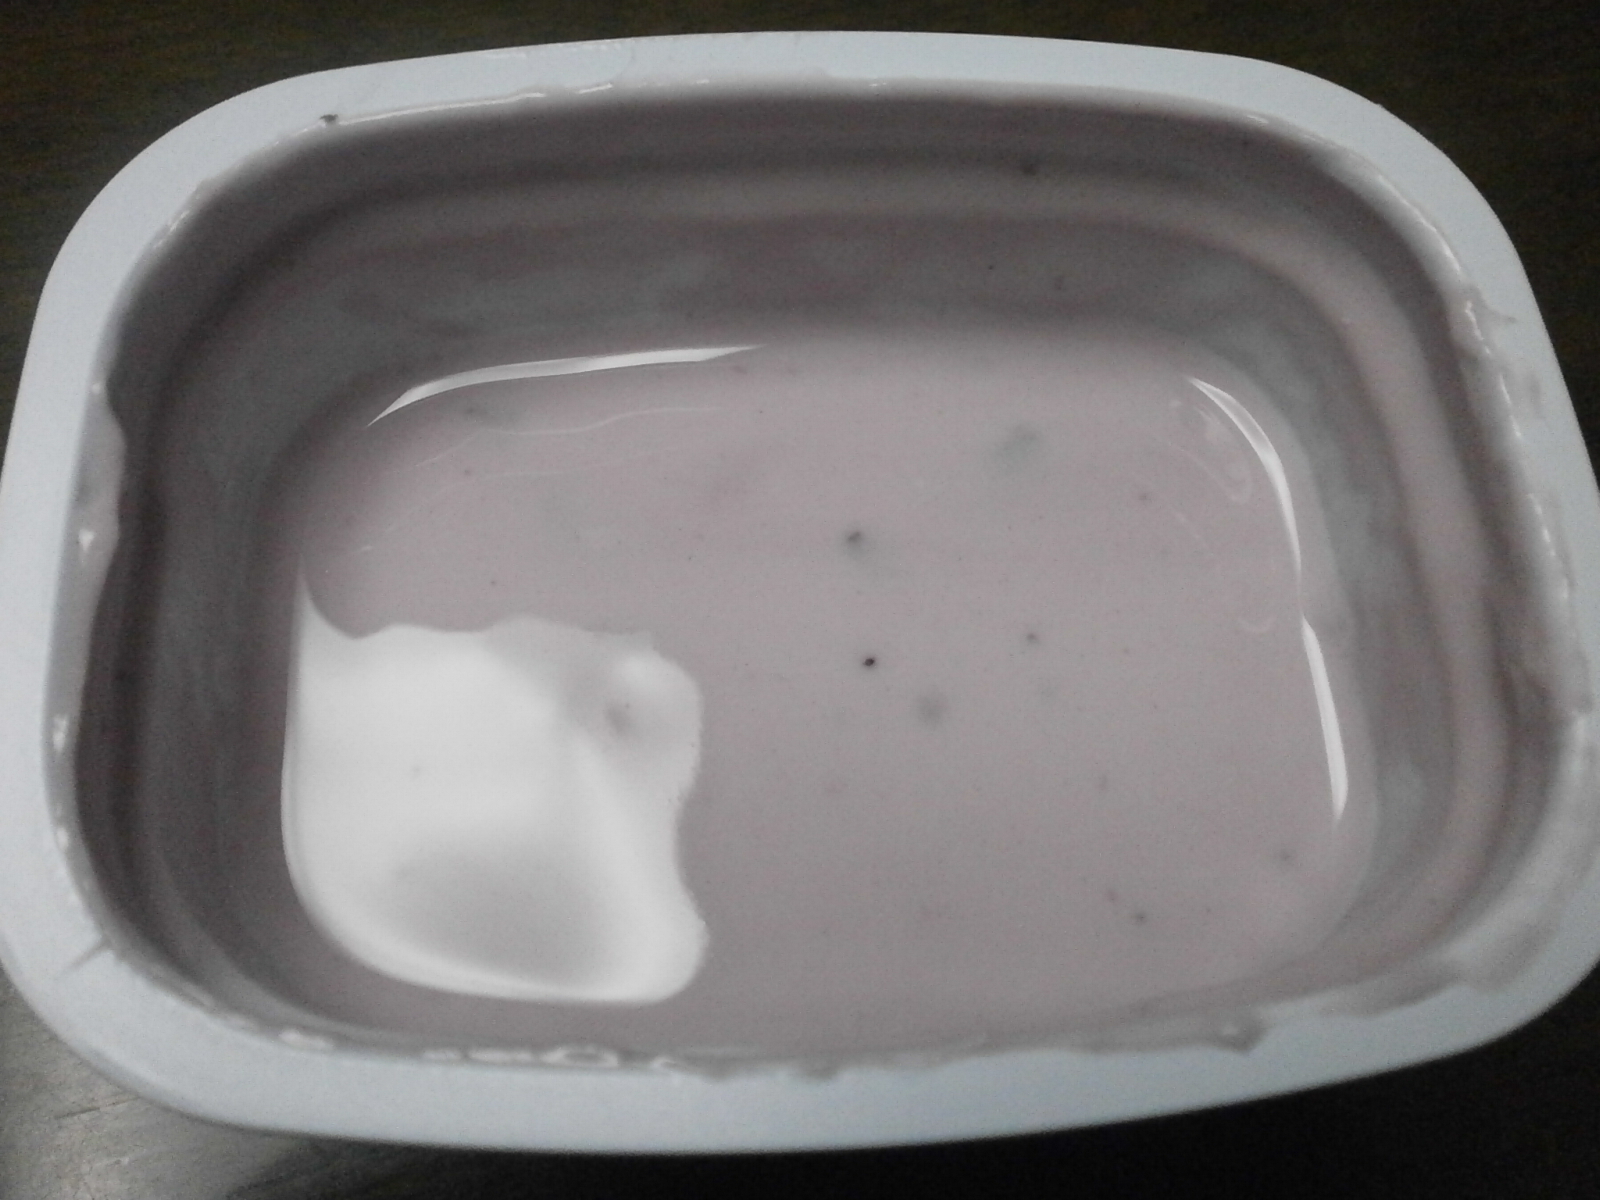 Blueberry Yoghurt (TOPVALU)